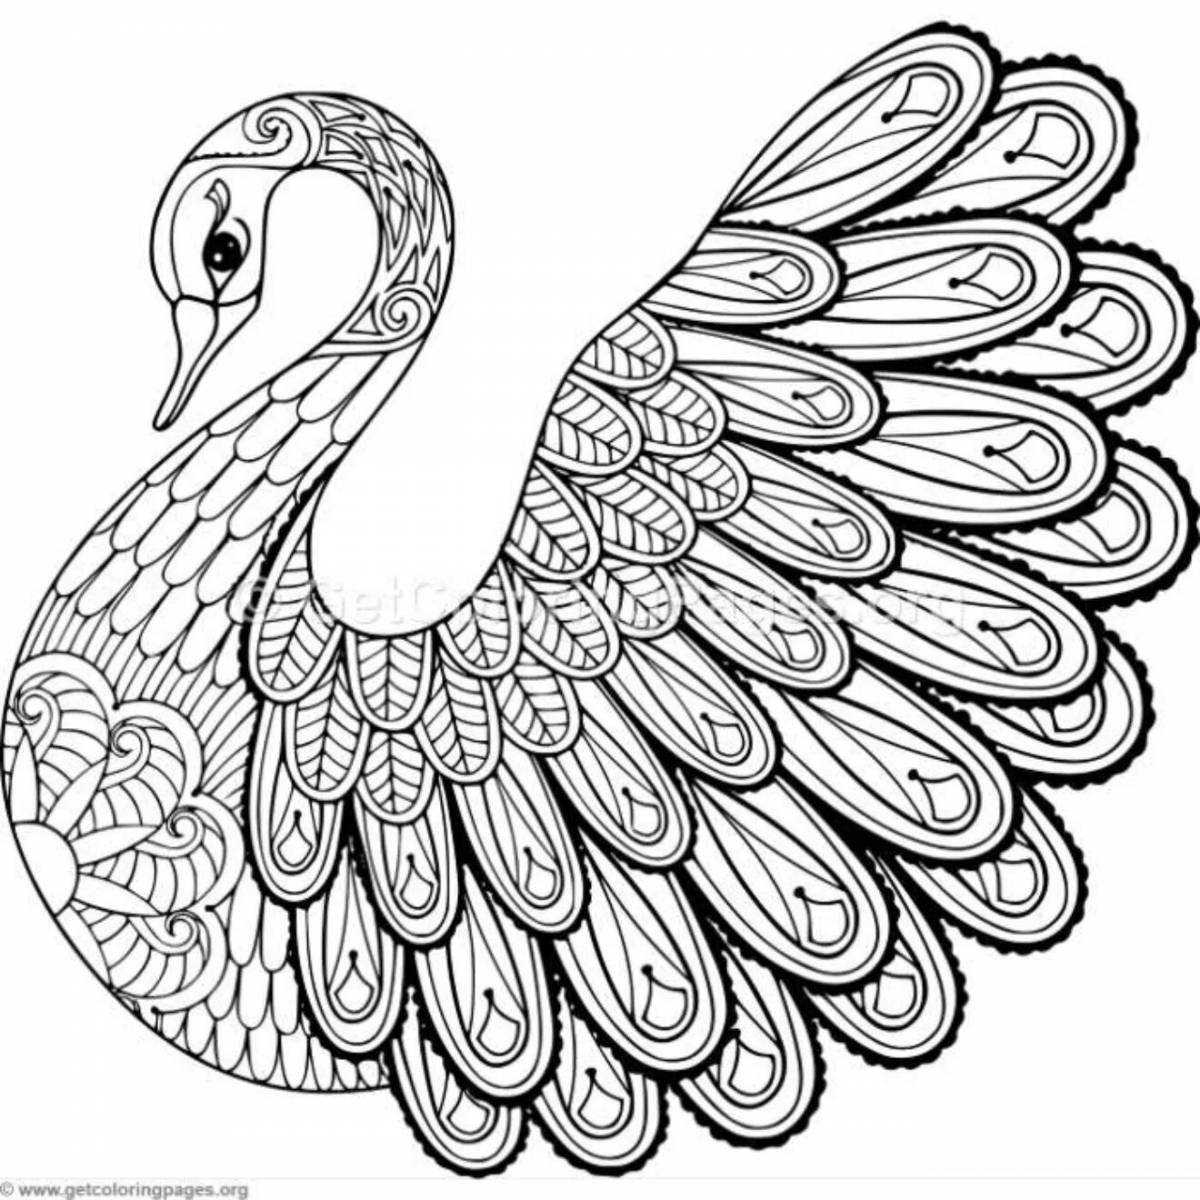 Coloring book charming swan antistress